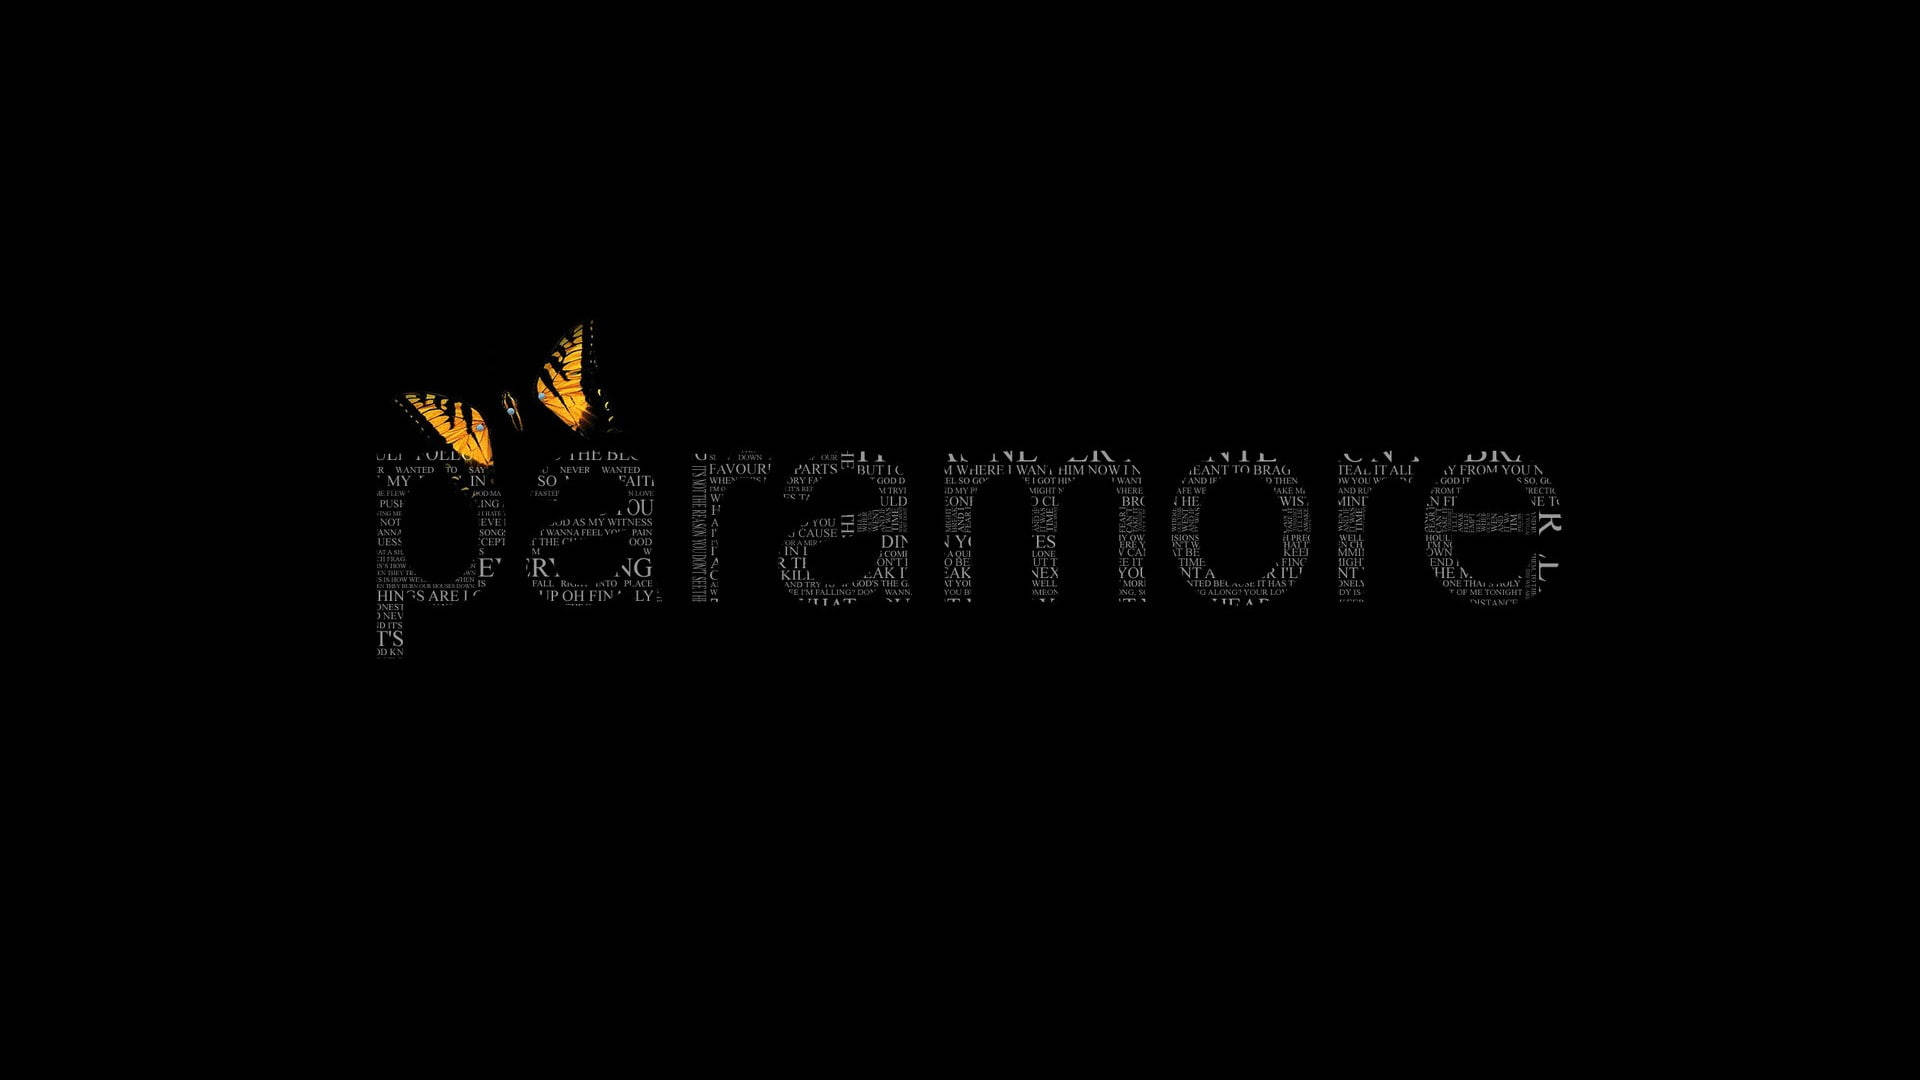 Paramore Brand New Eyes wallpaper.